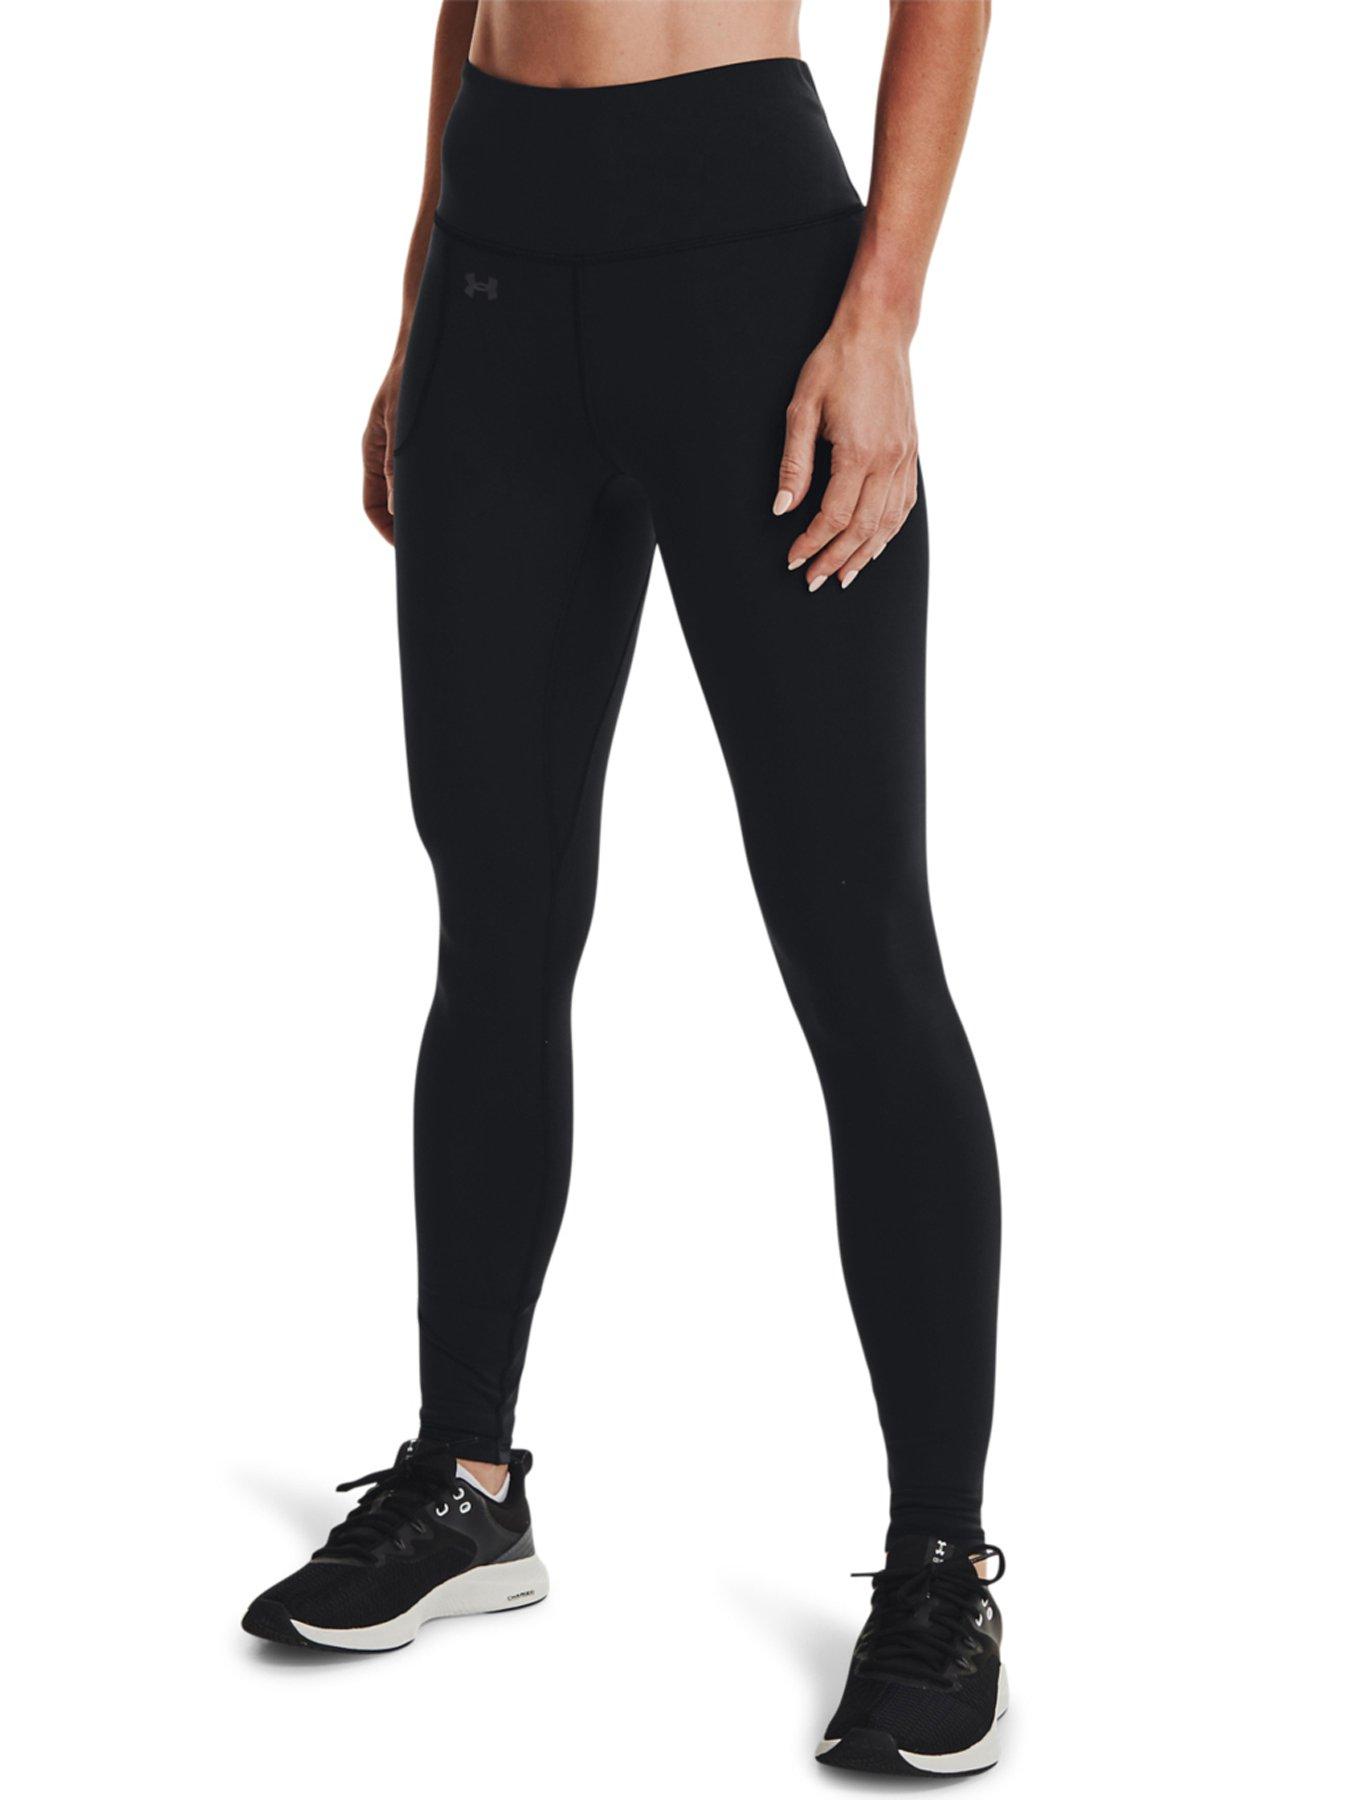 https://media.littlewoods.com/i/littlewoods/VKIOB_SQ1_0000000004_BLACK_MDf/under-armour-womens-training-motion-legging-black.jpg?$180x240_retinamobilex2$